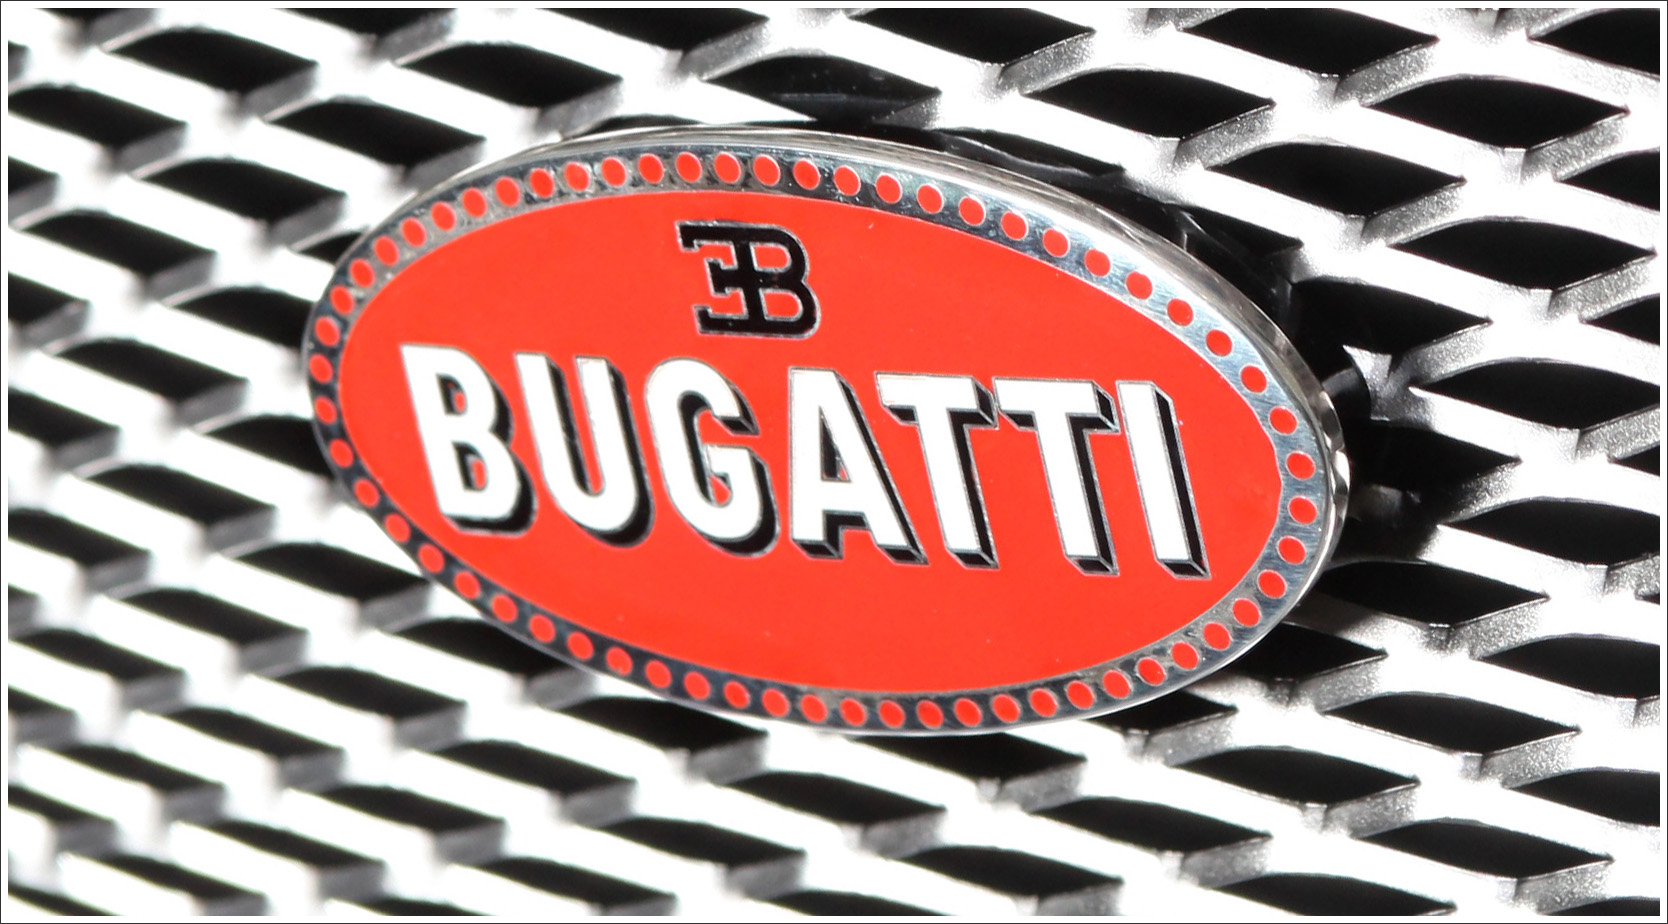 Bugatti VALVOSANITARIA логотип